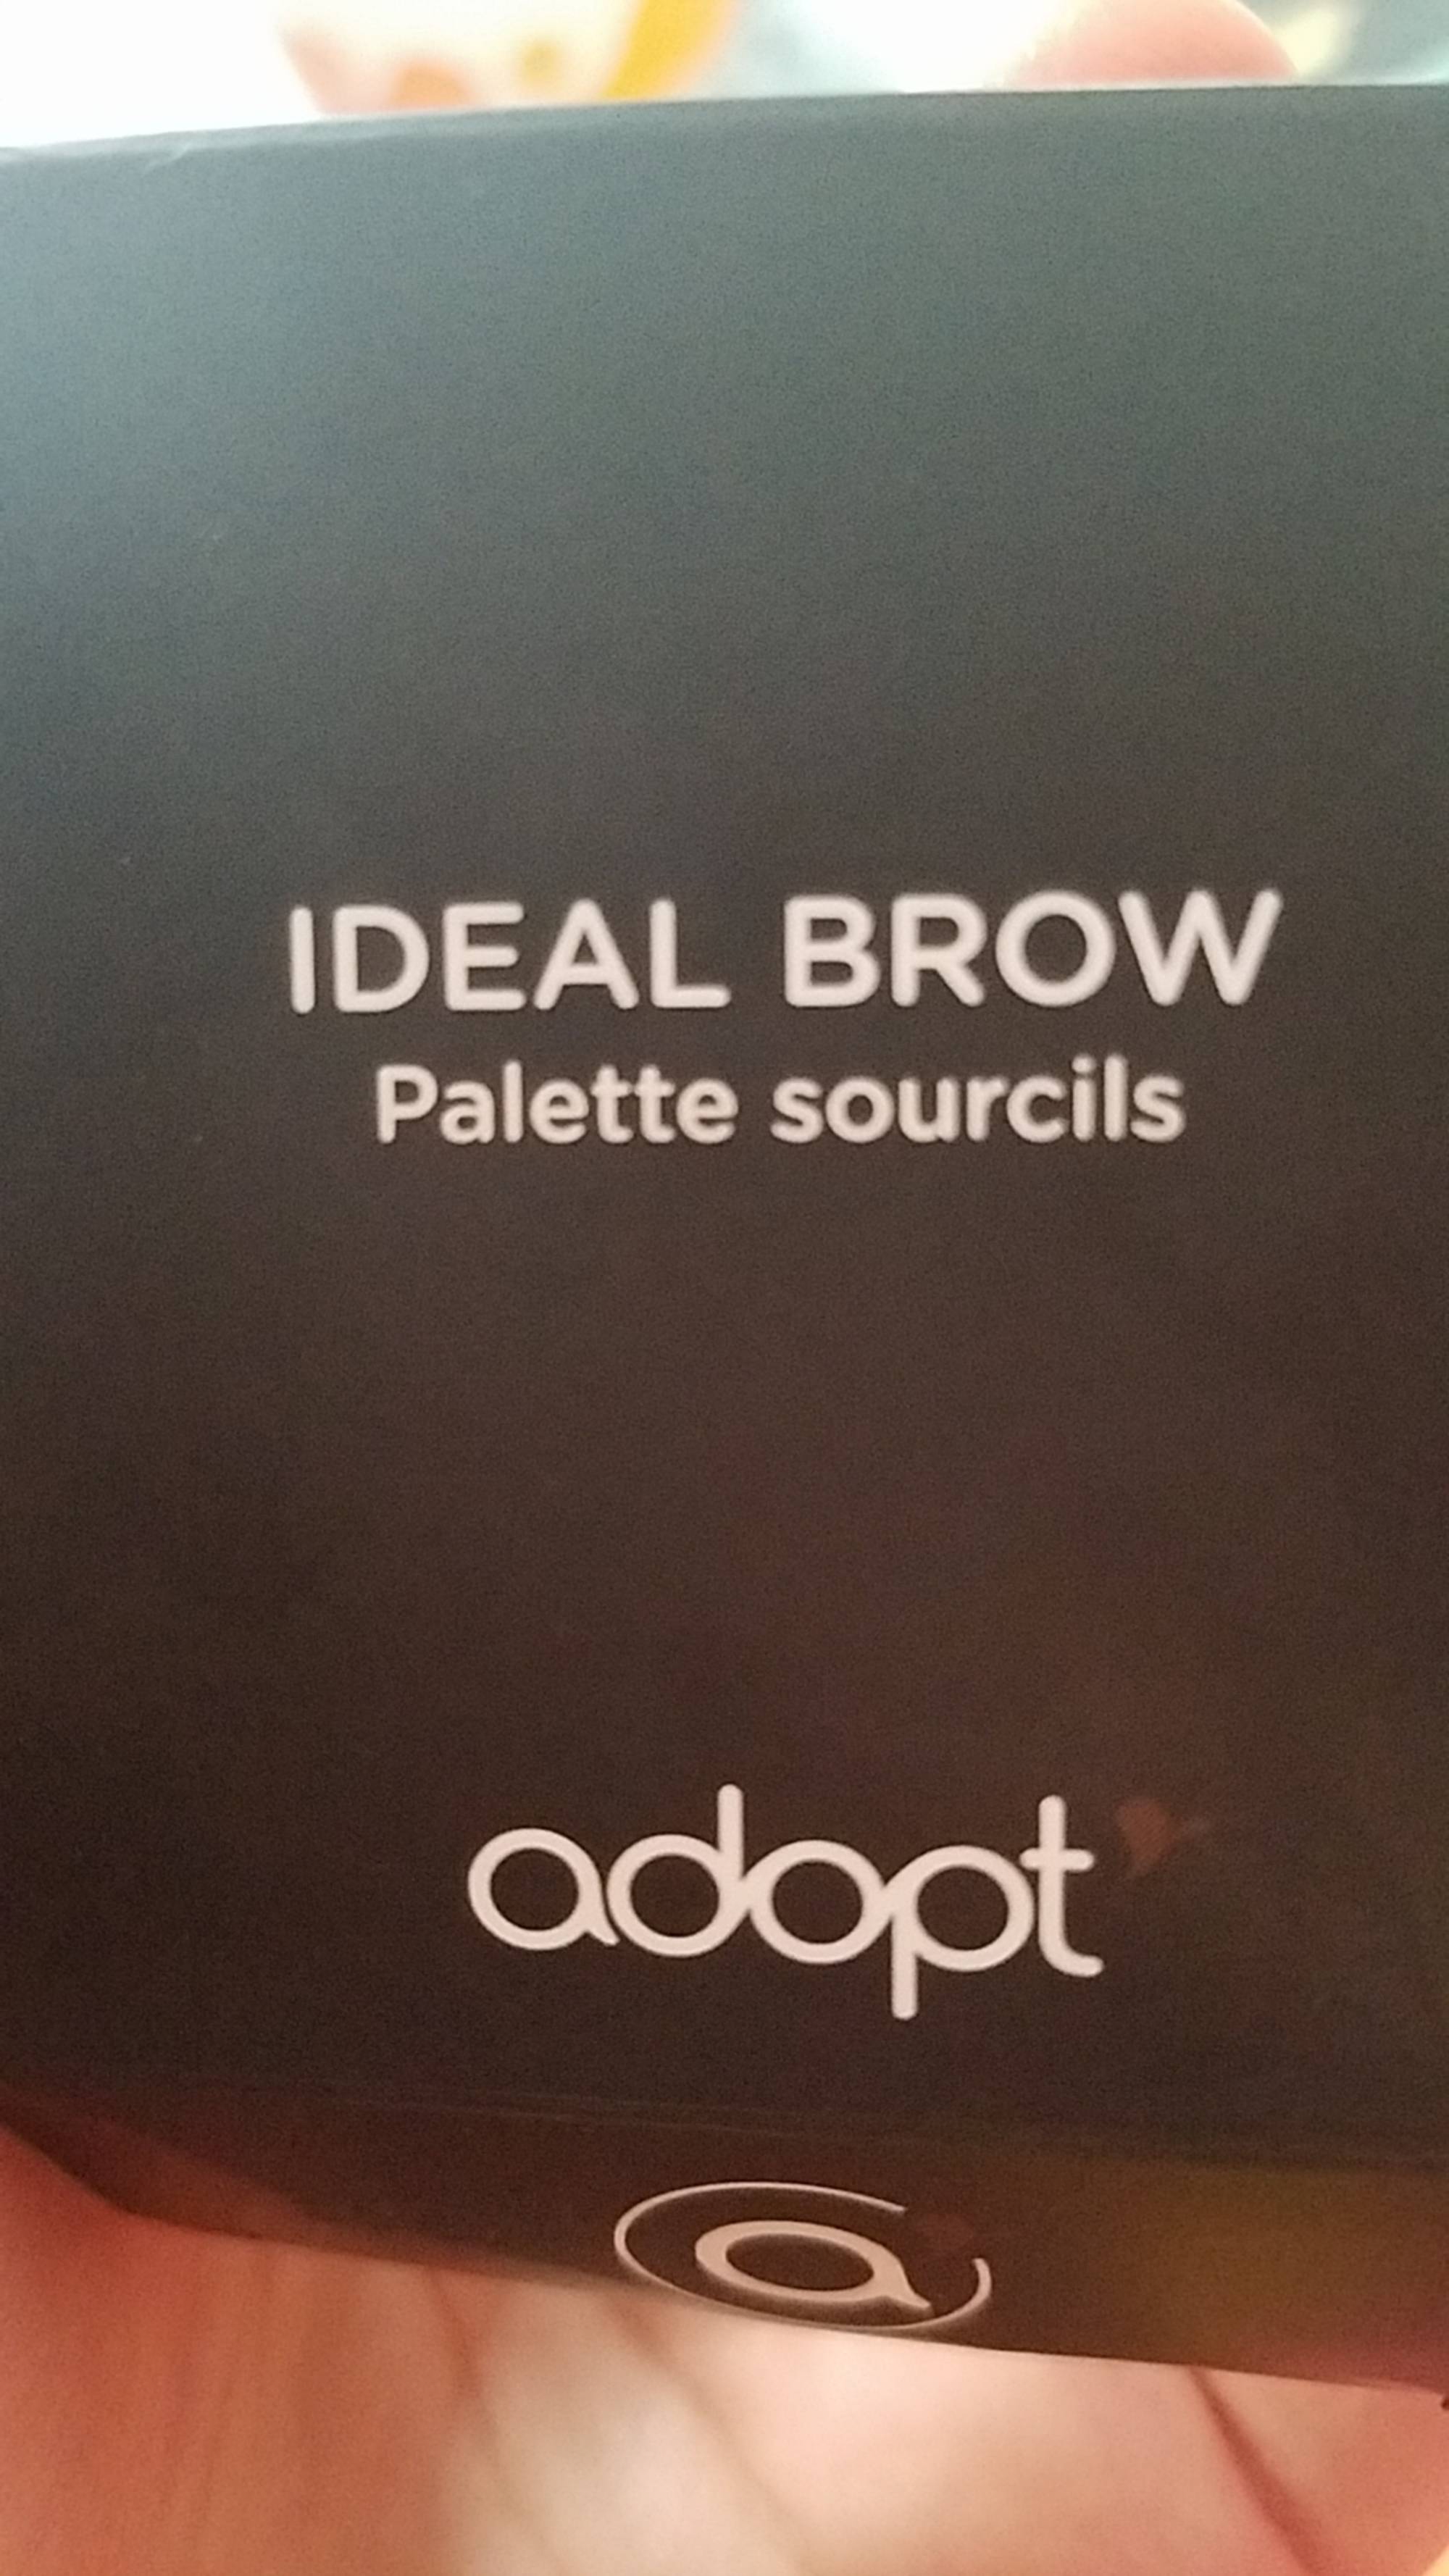 ADOPT' - Ideal brow - Palette sourcils